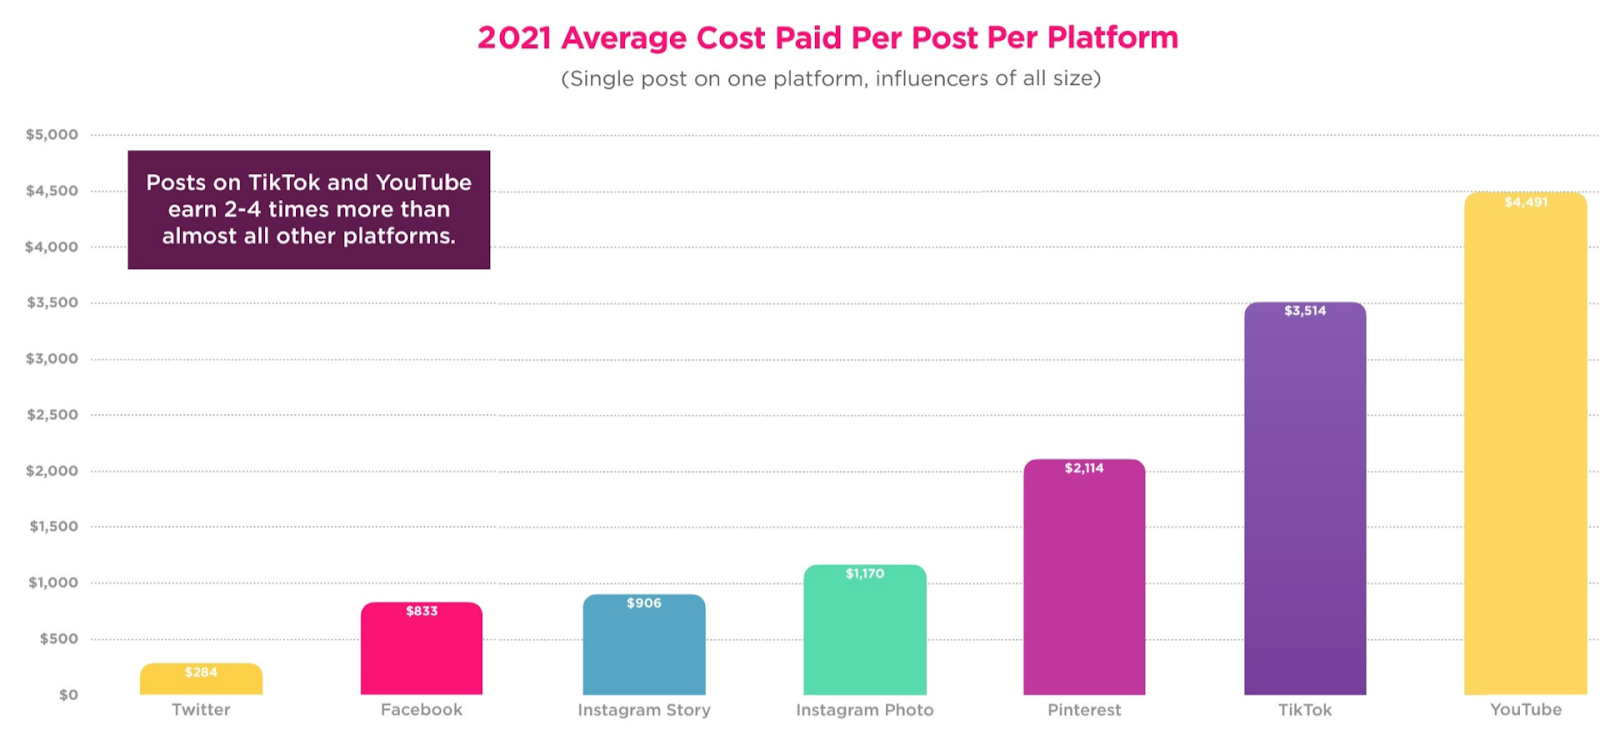 2021 Average Cost Paid Per Post Per Platform